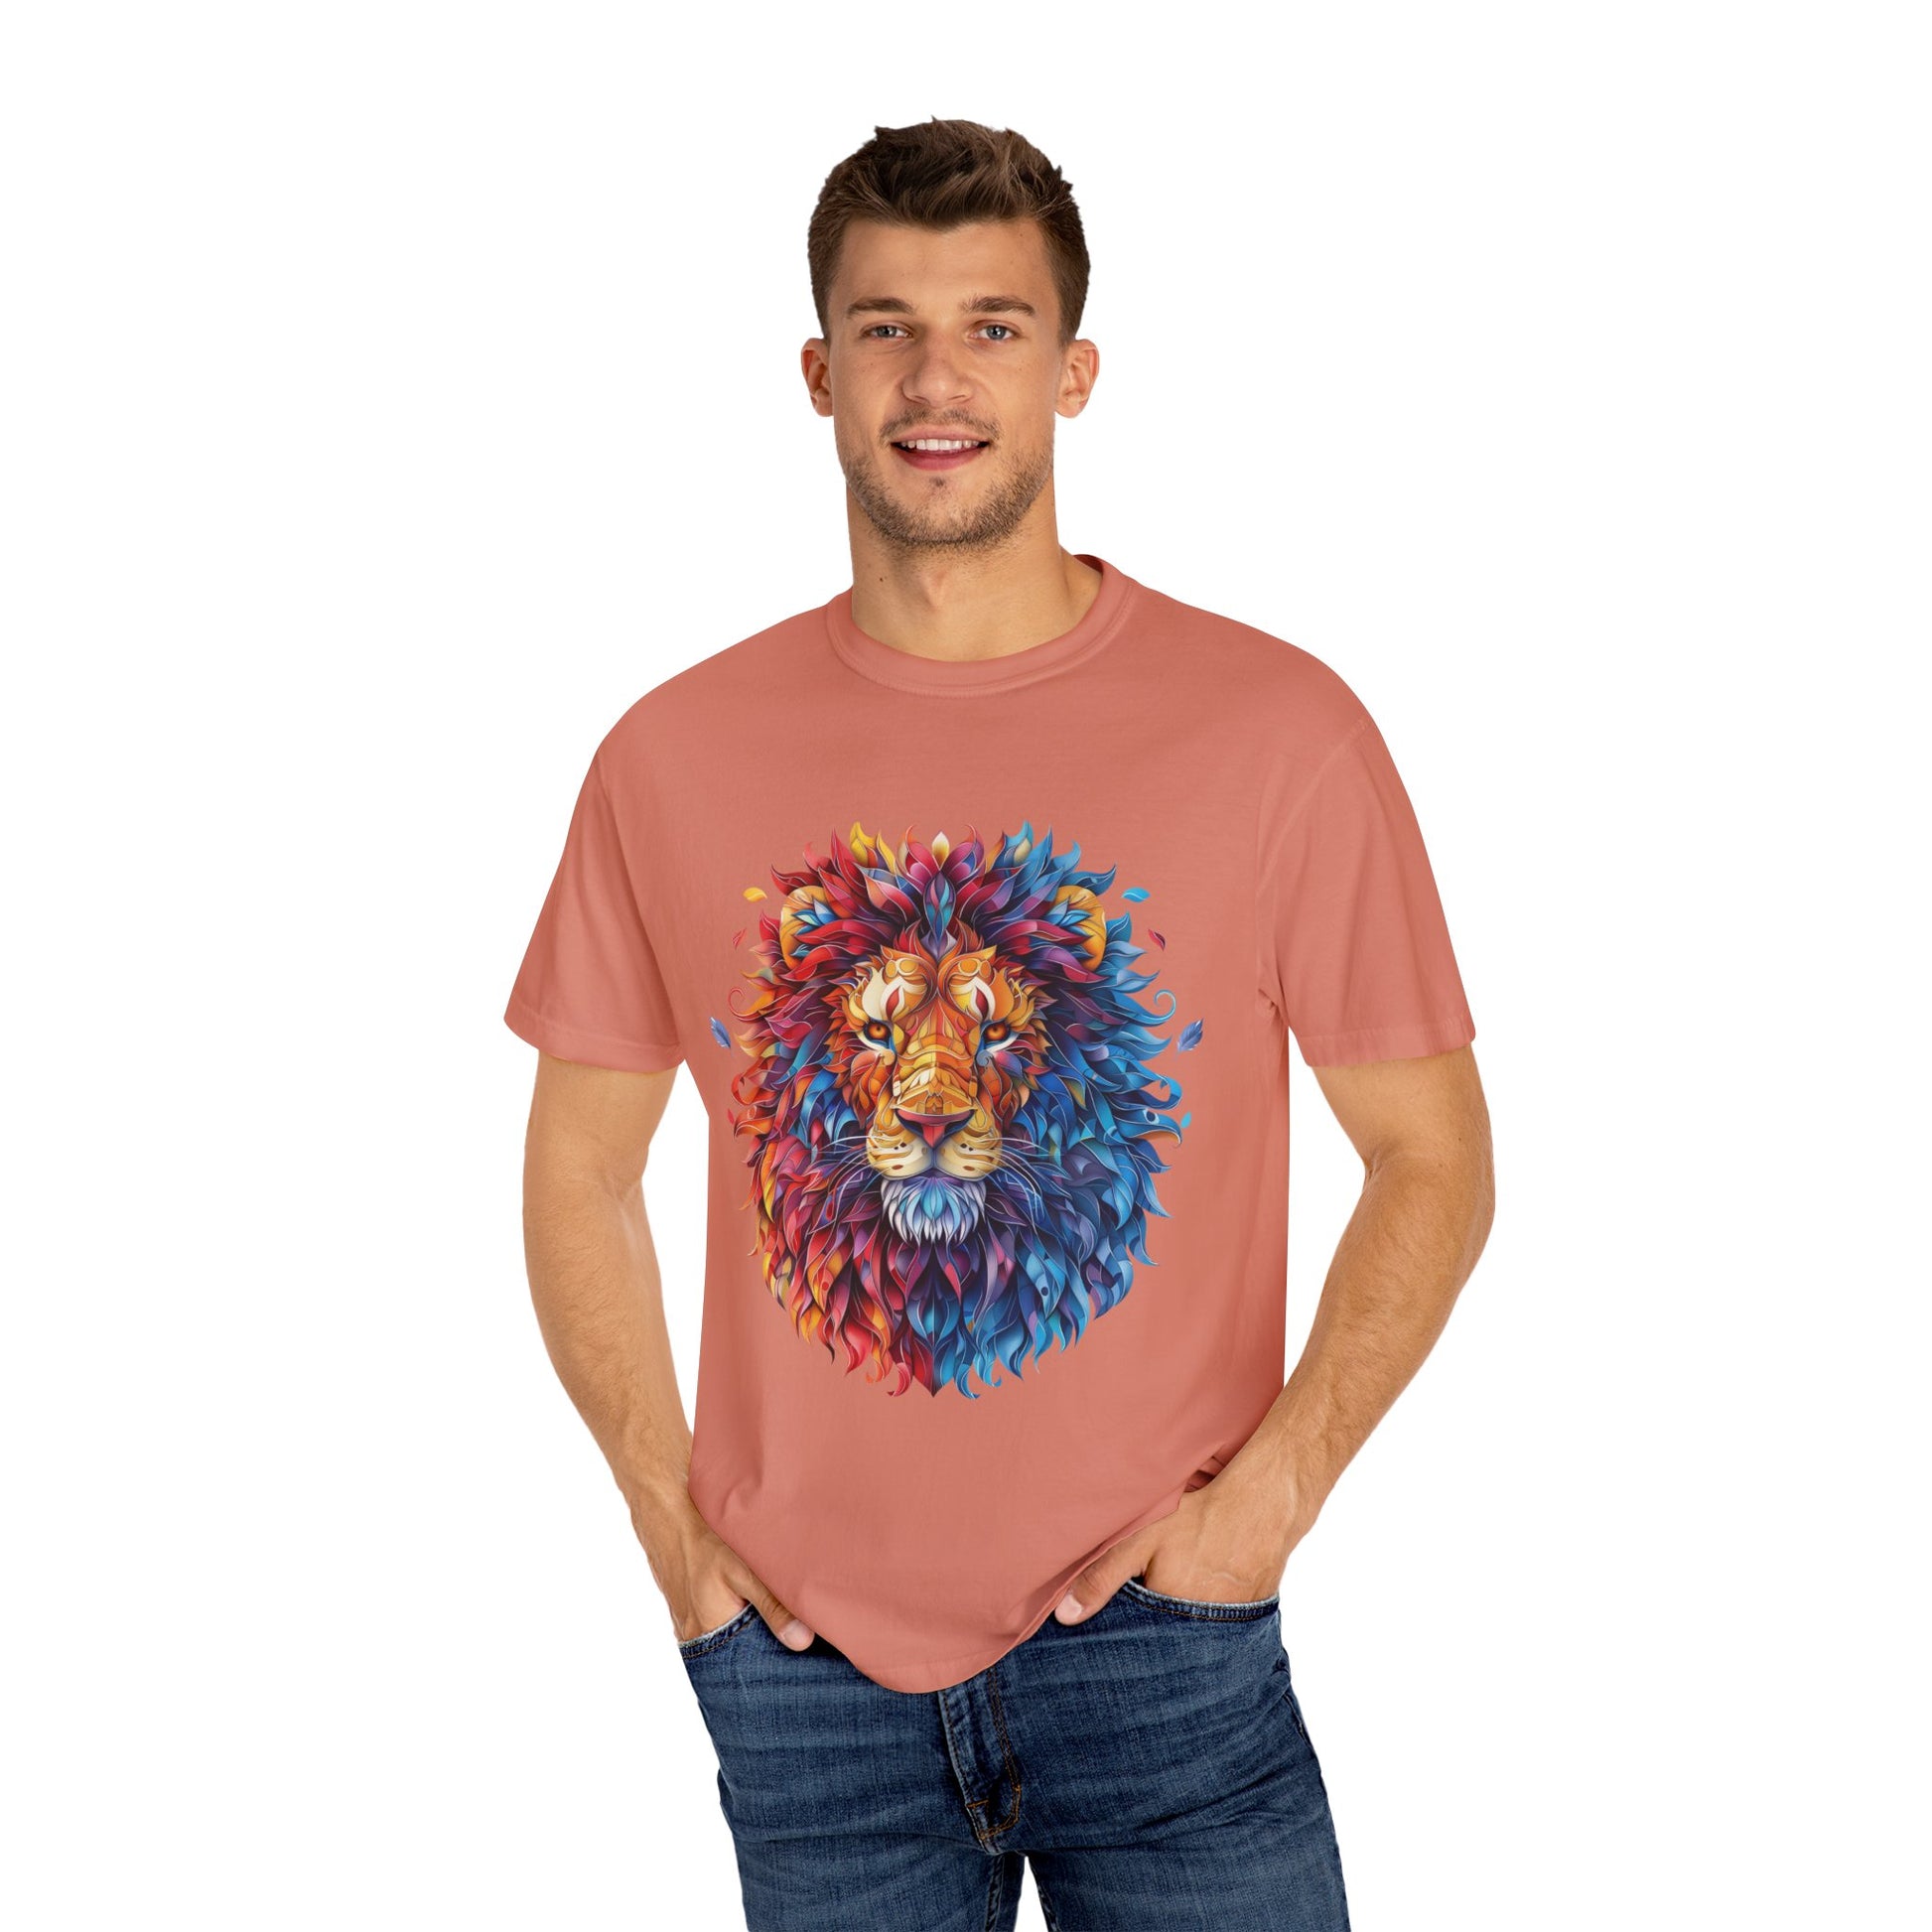 Lion Head Cool Graphic Design Novelty Unisex Garment-dyed T-shirt Cotton Funny Humorous Graphic Soft Premium Unisex Men Women Terracotta T-shirt Birthday Gift-57